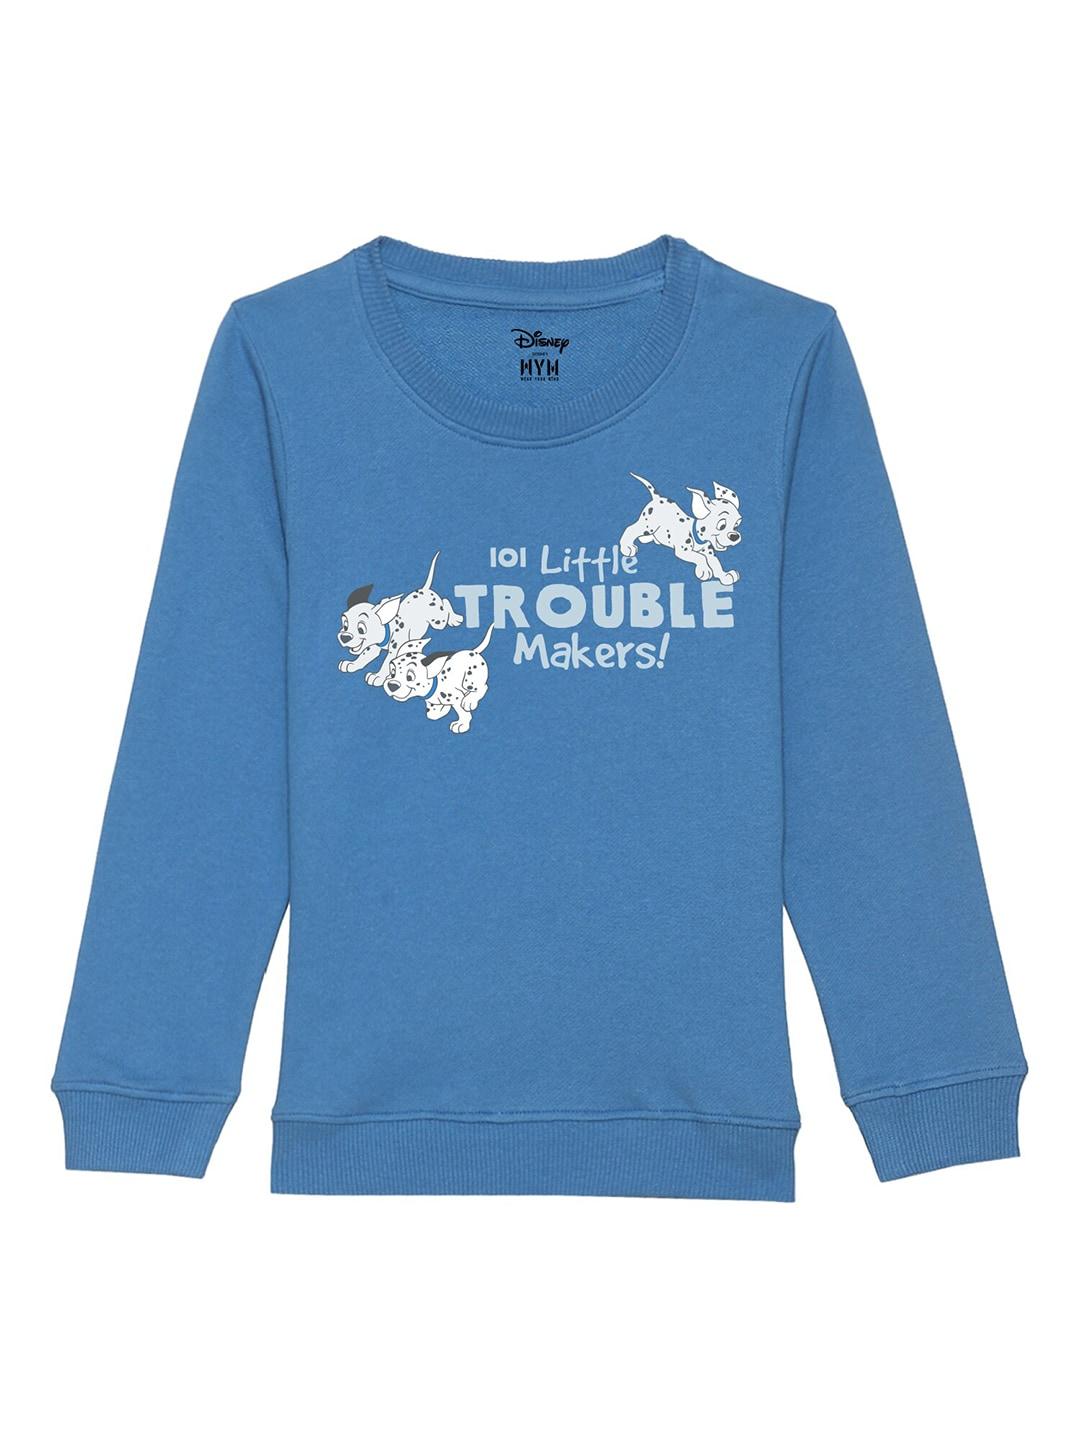 disney-by-wear-your-mind-kids-blue-printed-sweatshirt